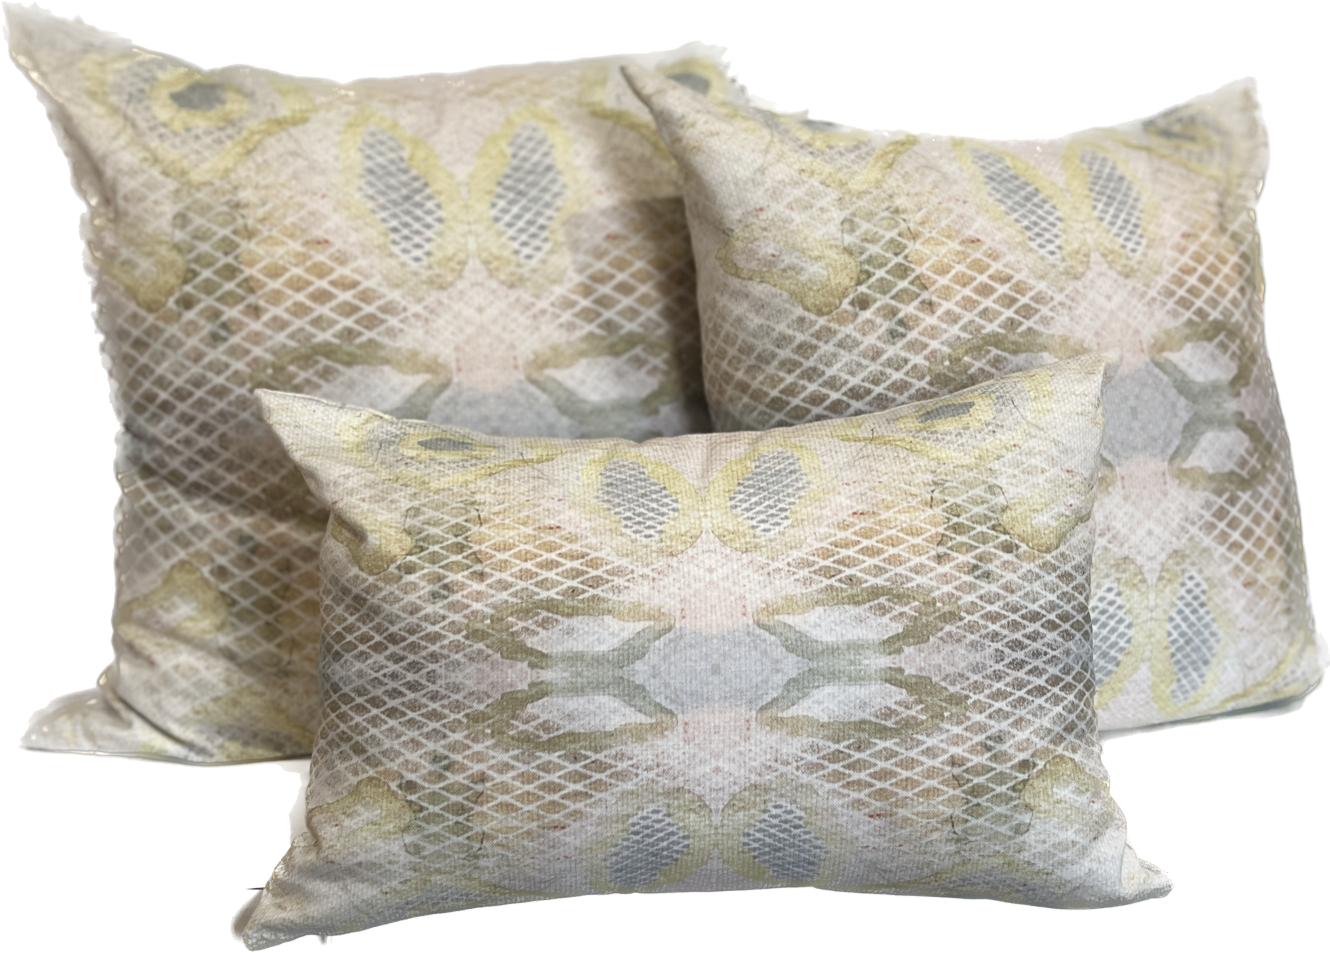 Spring Snake Pillow Collection